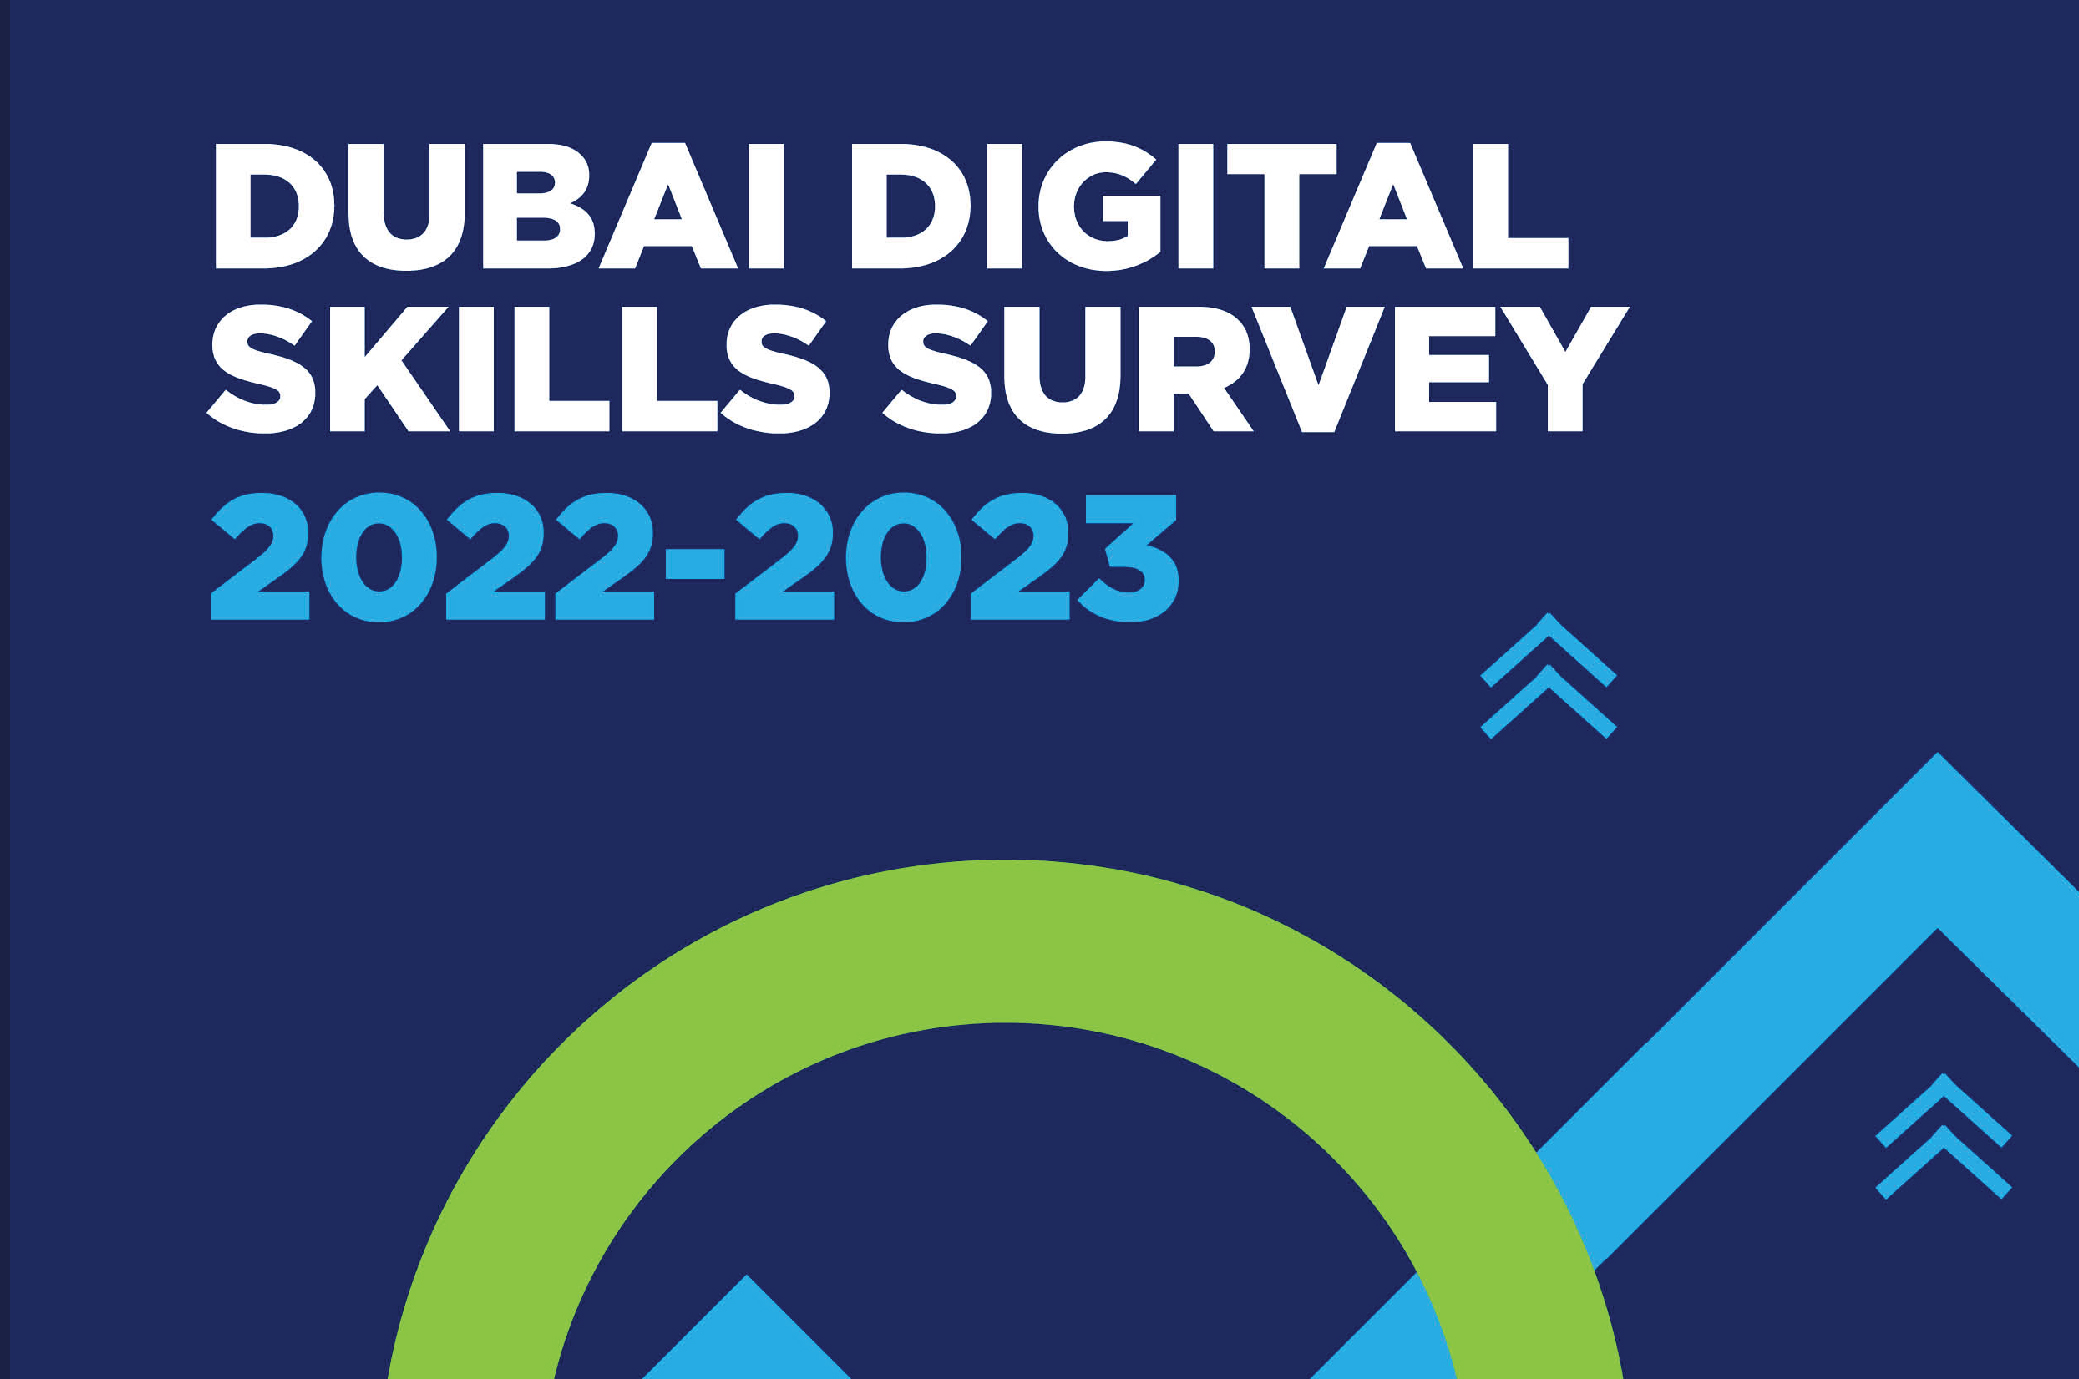 DUBAI DIGITAL SKILLS STUDY 2022-2023